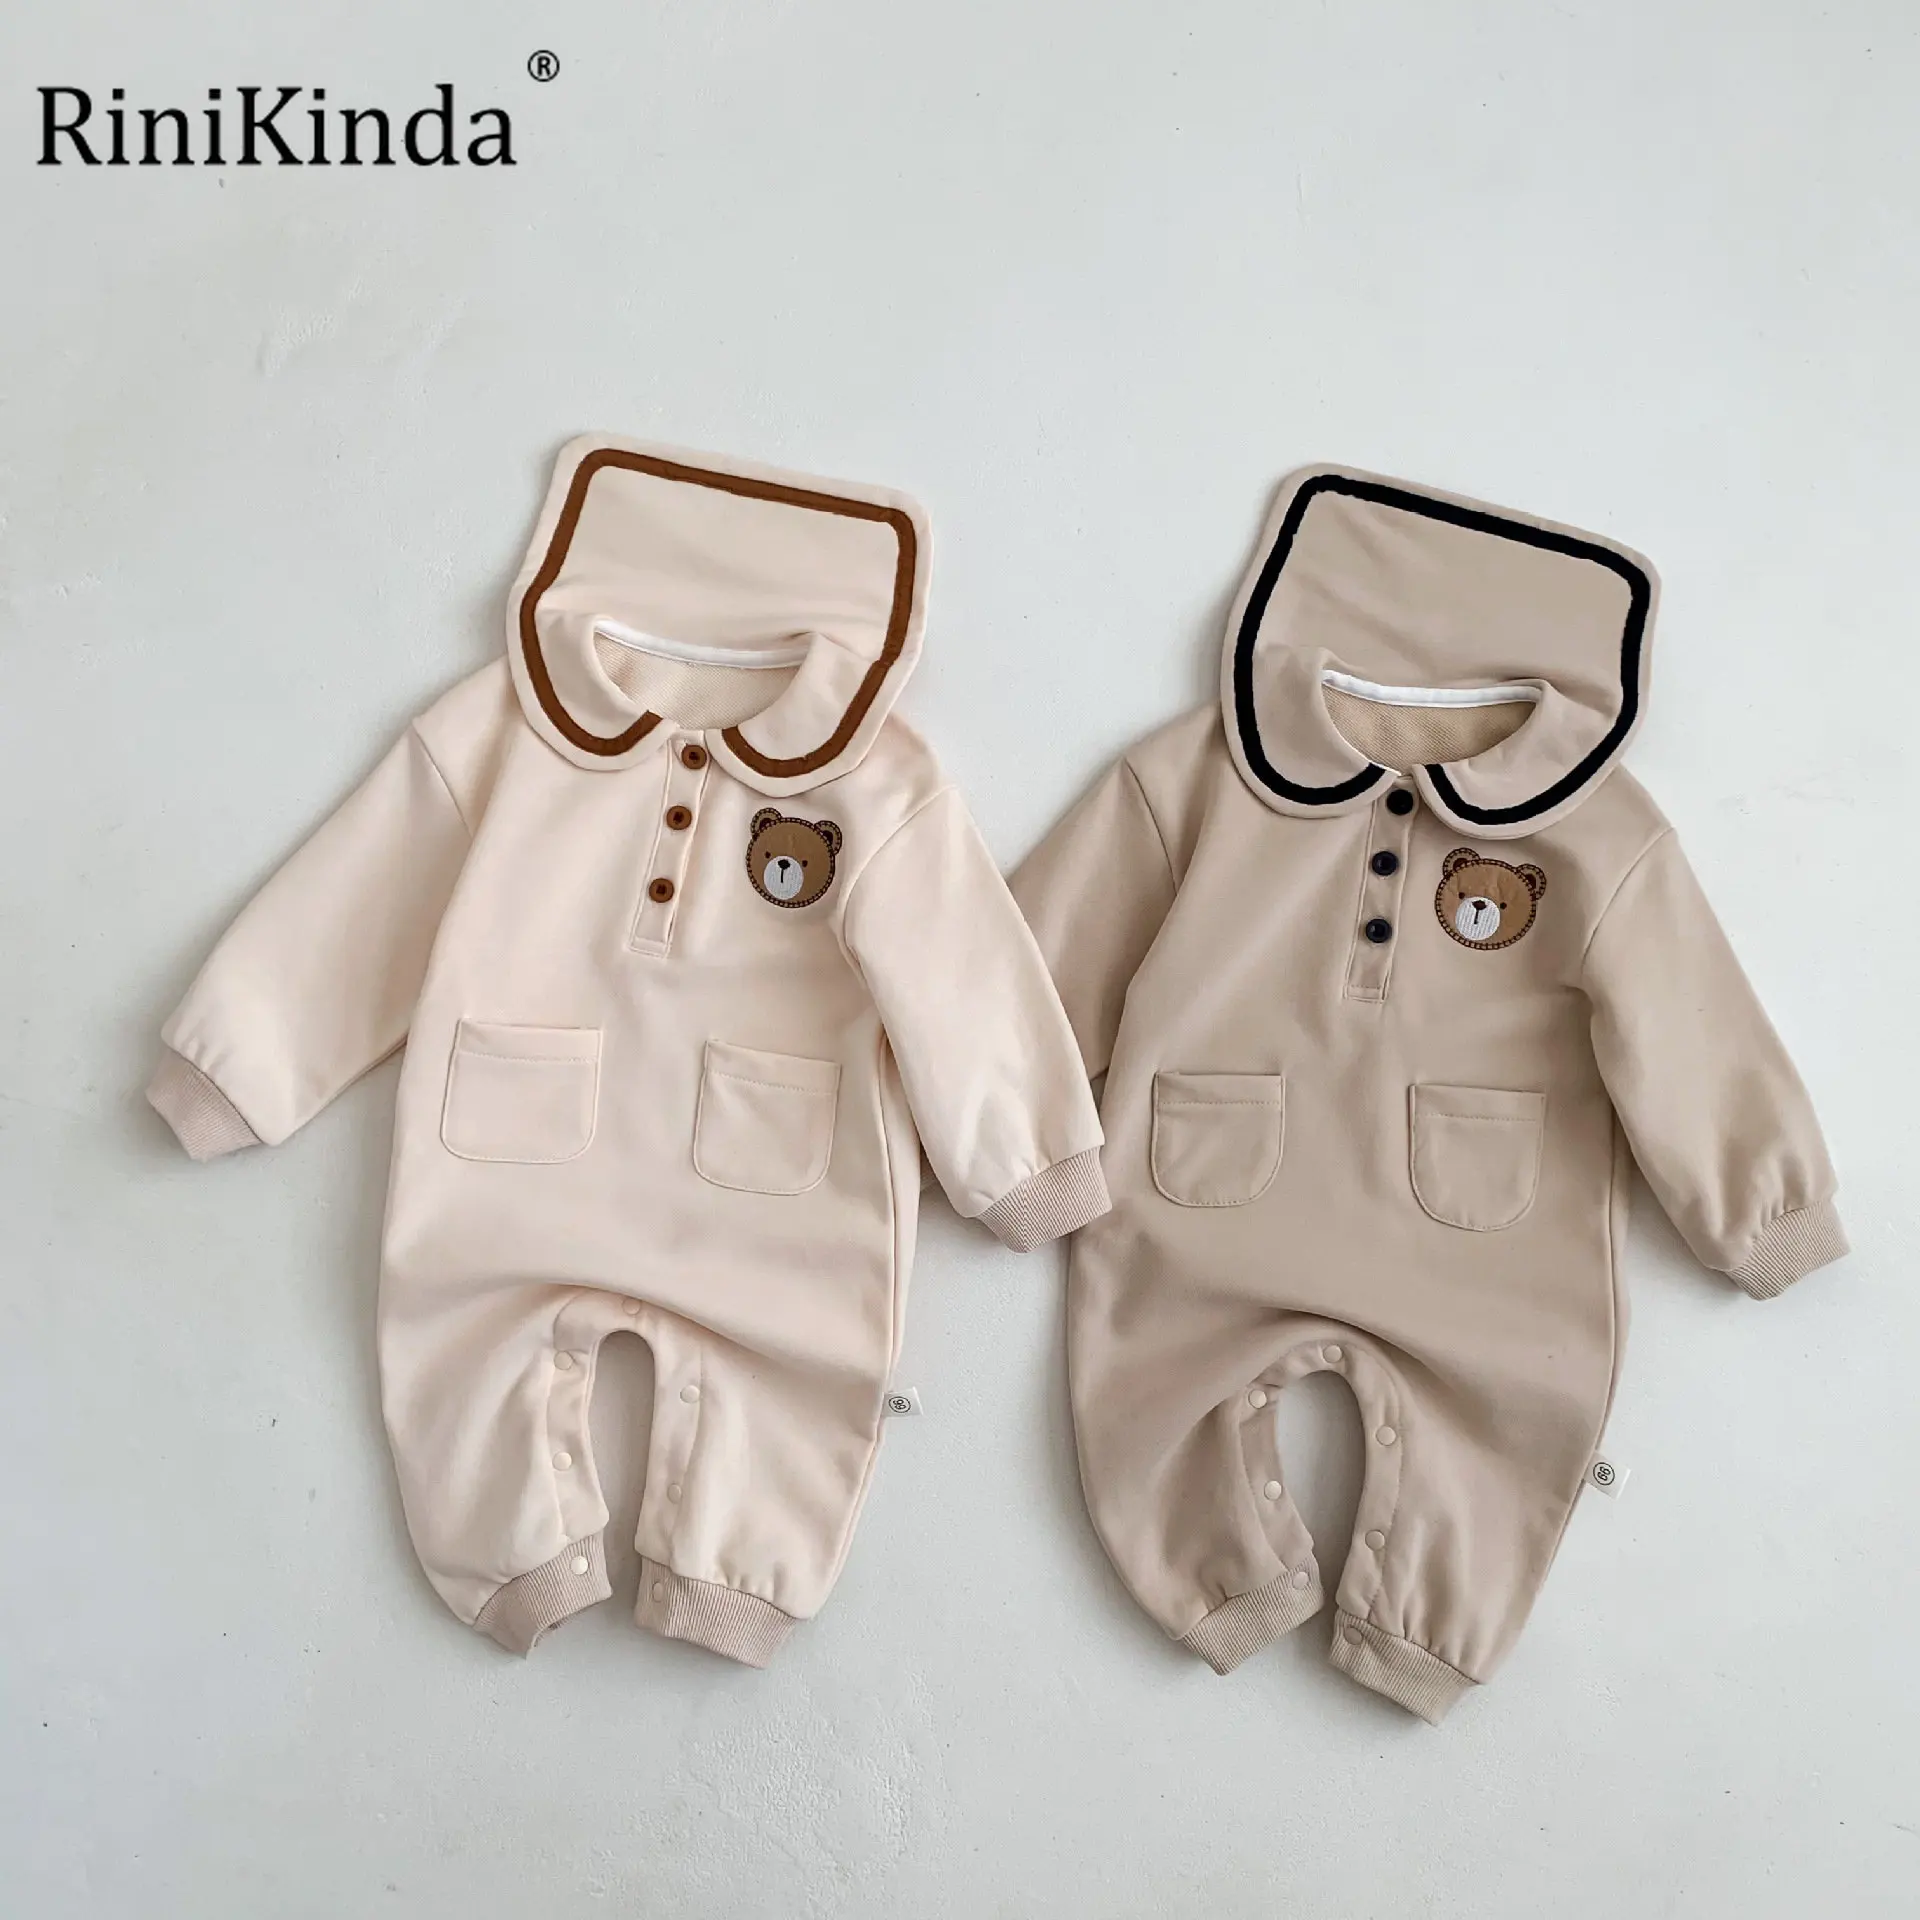 

RiniKinda Autumn Newborn Infant Baby Boys Girls Romper Playsuit Overalls Cotton Long Sleeve Turn Down Collar Jumpsuit Clothes